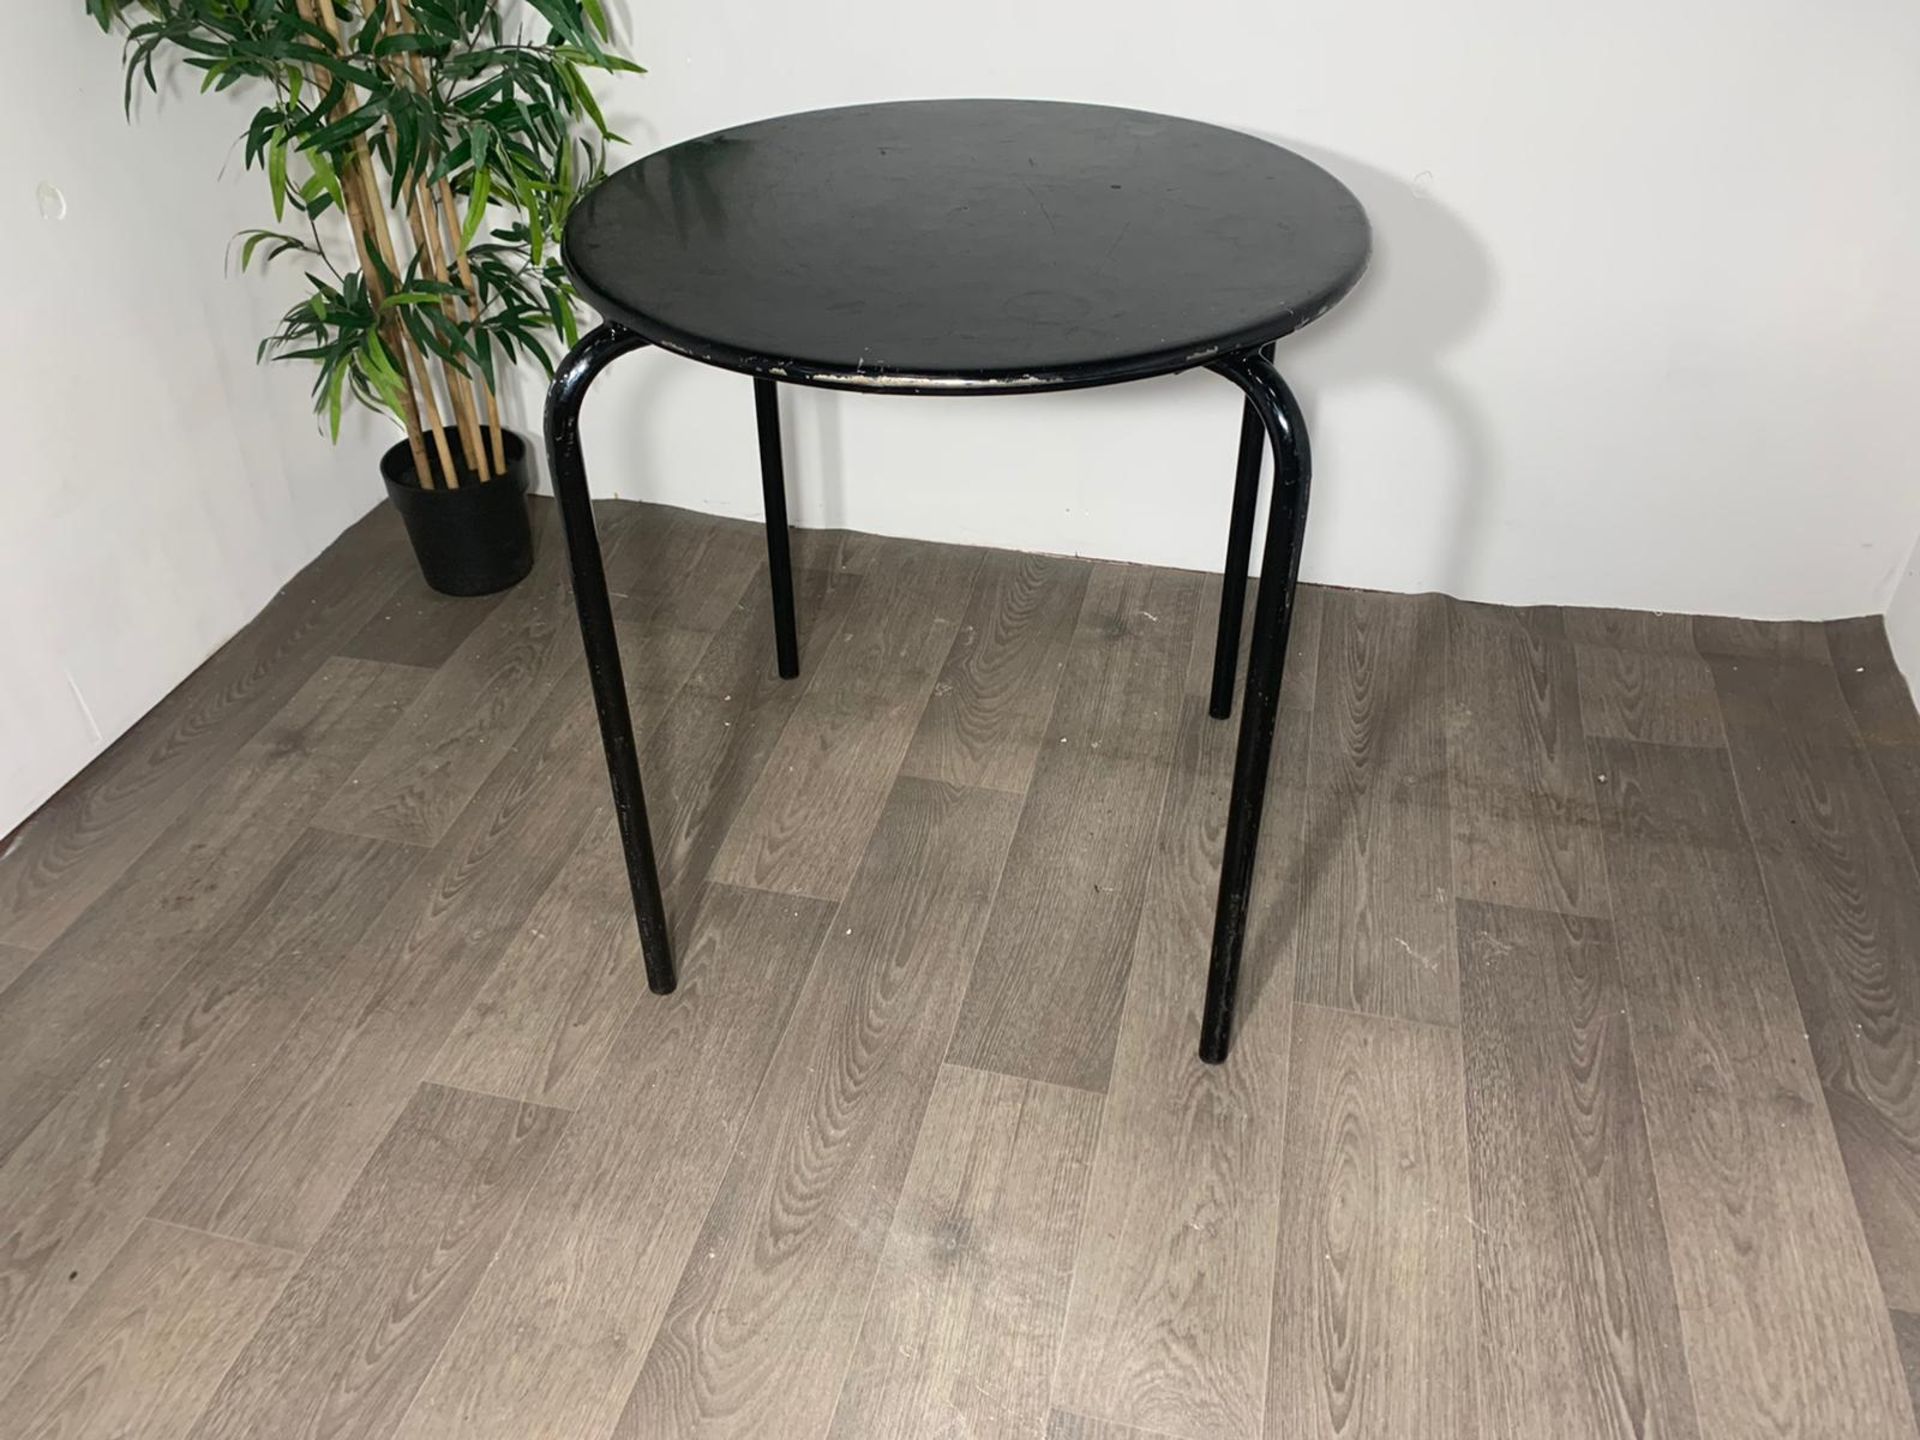 Steel Circular Black Table - Image 3 of 3